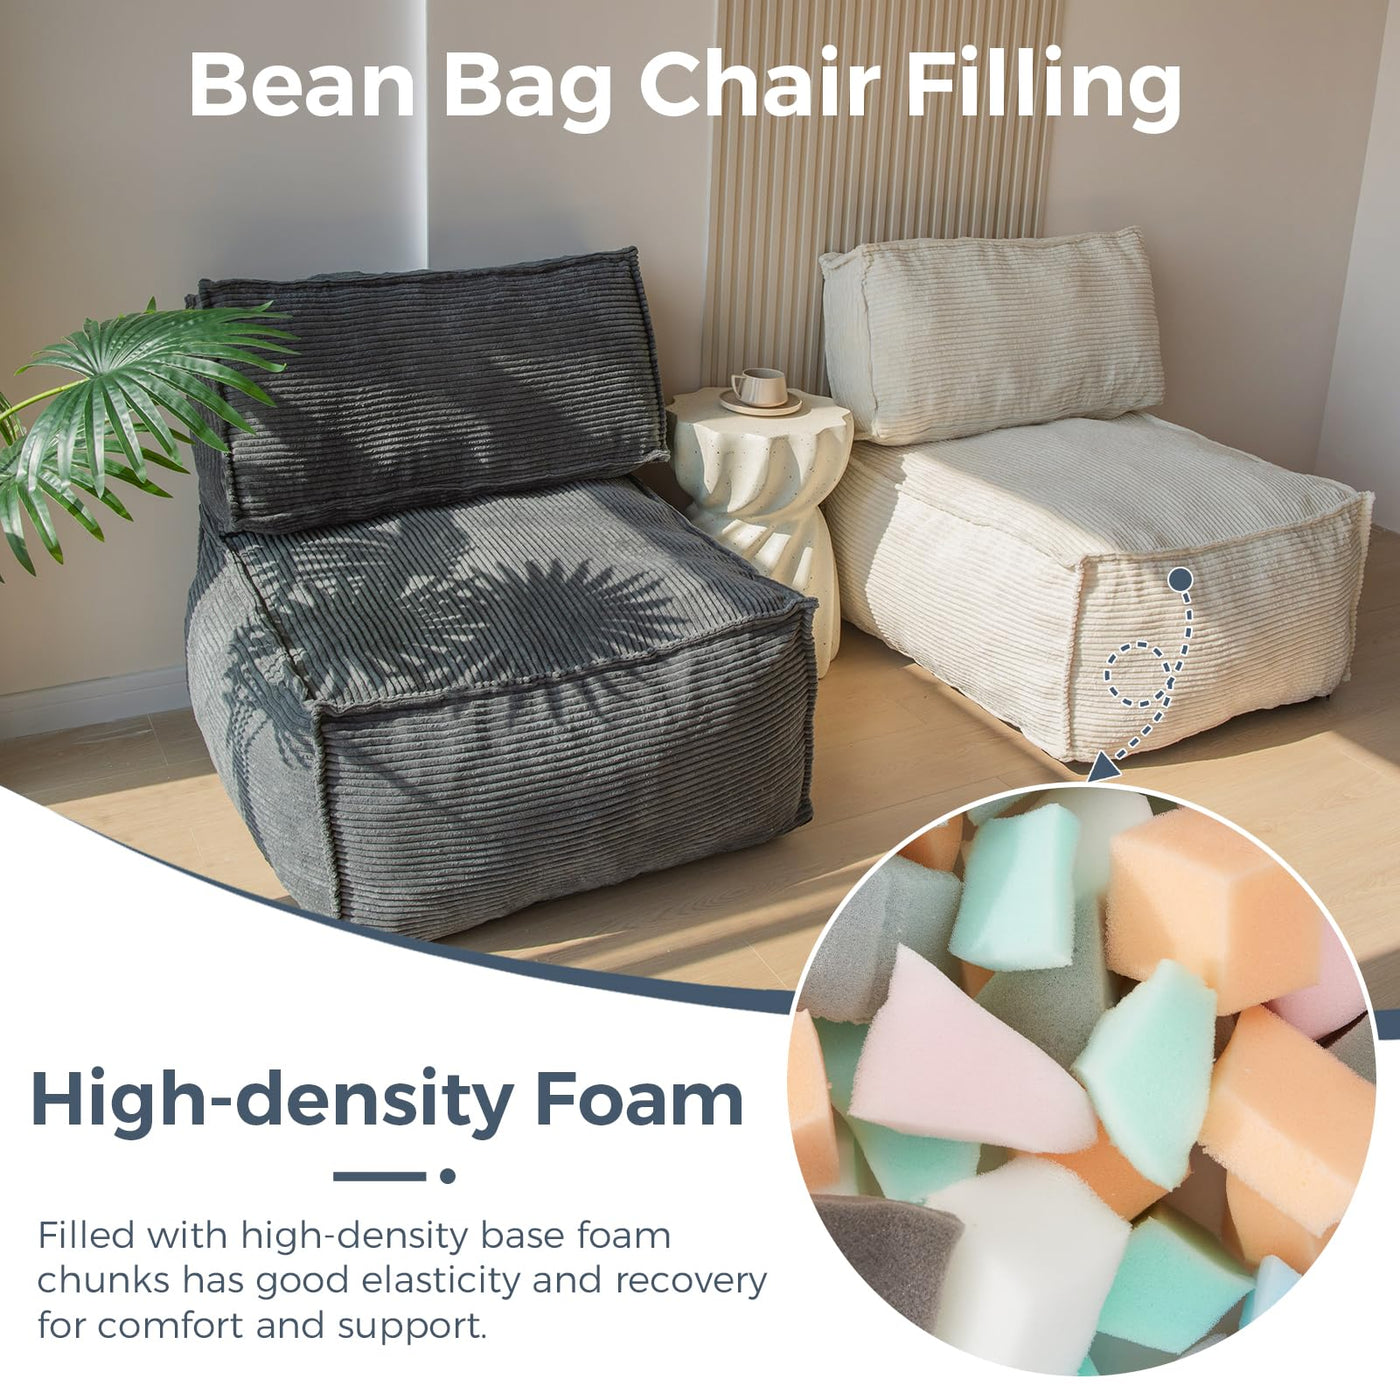 MAXYOYO 4 in 1 Modular Bean Bag Sofa, Multi-Function Corduroy Bean Bag Chair, Floor Cushion, Pouf, Foot Stool (Beige)